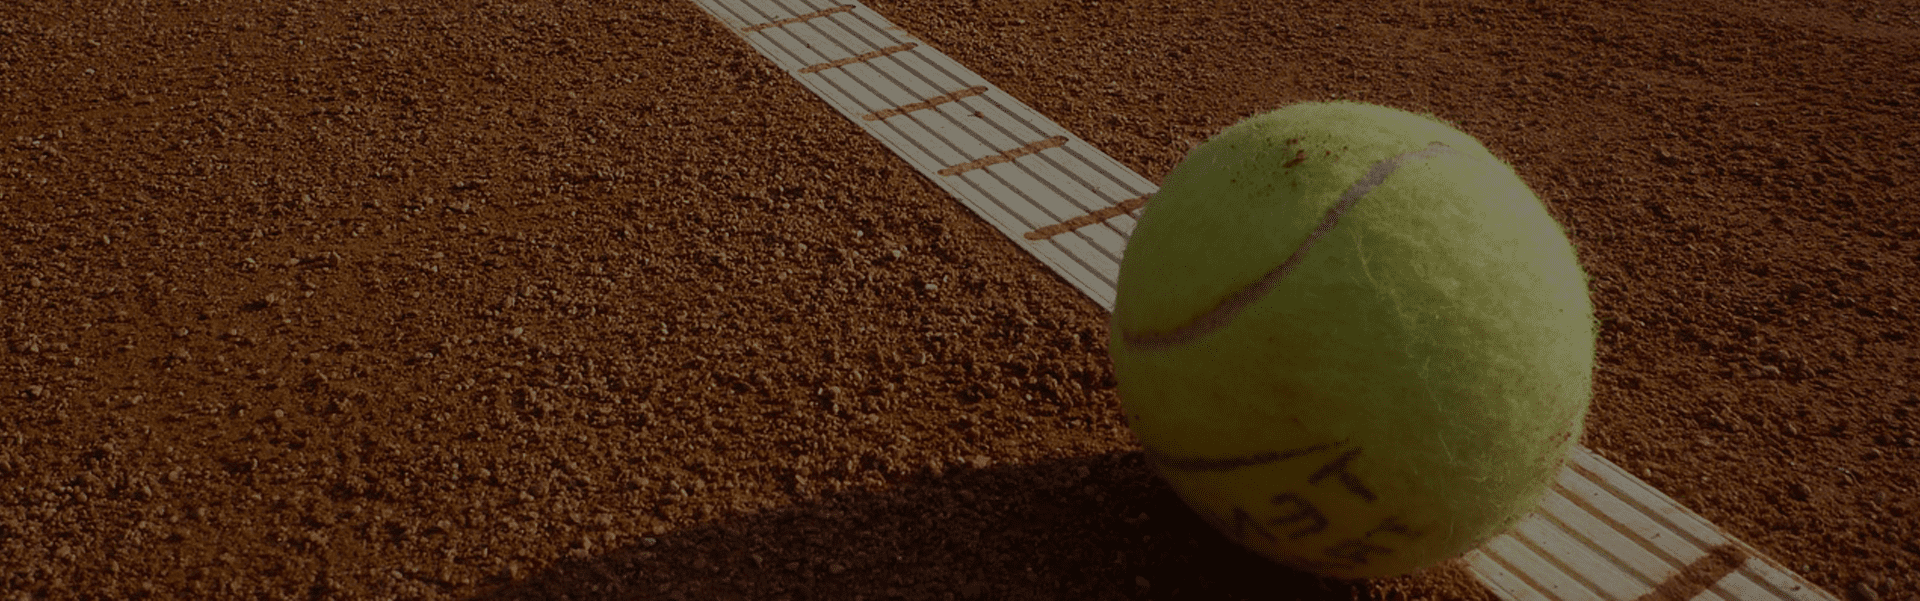 image tennis